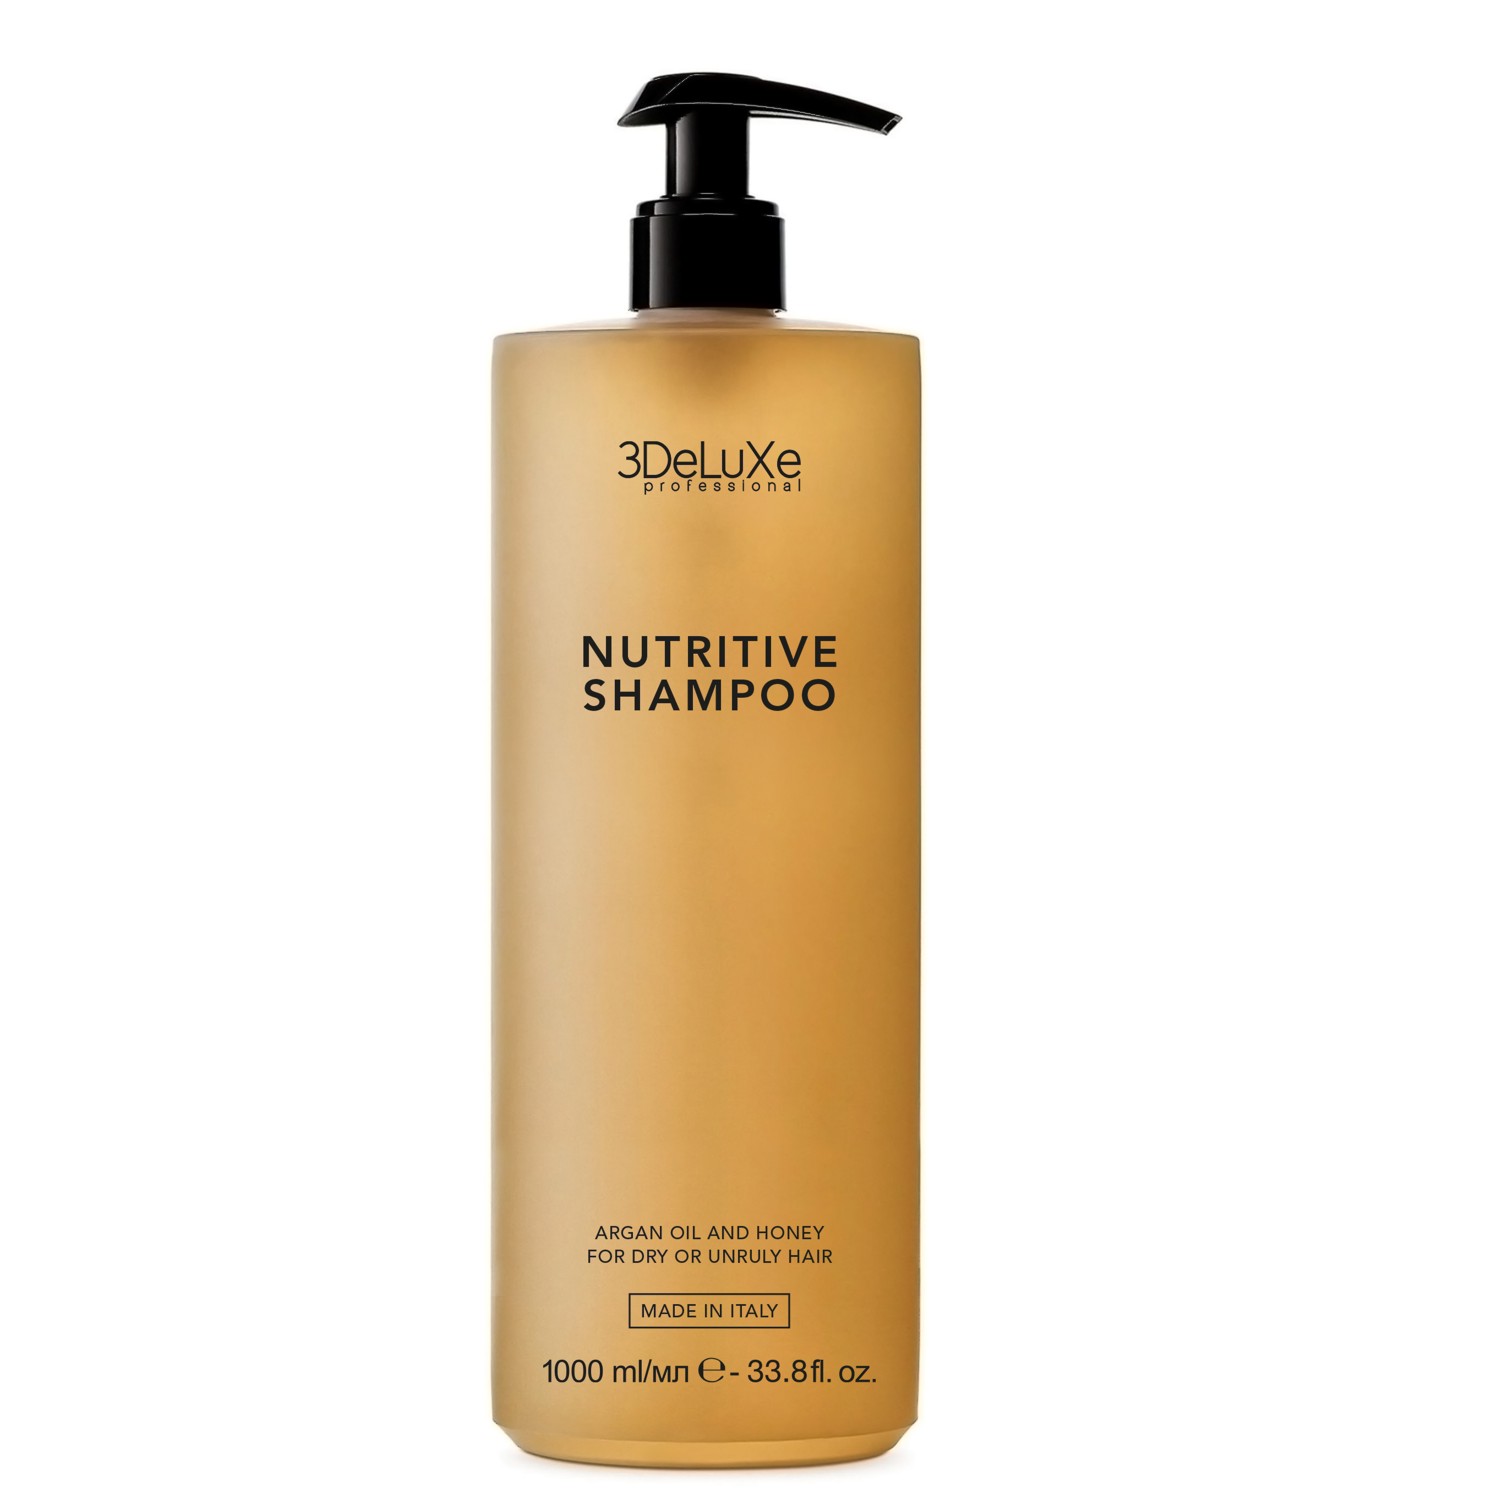 3DeLuXe Professional NUTRITIVE Shampoo 1 L